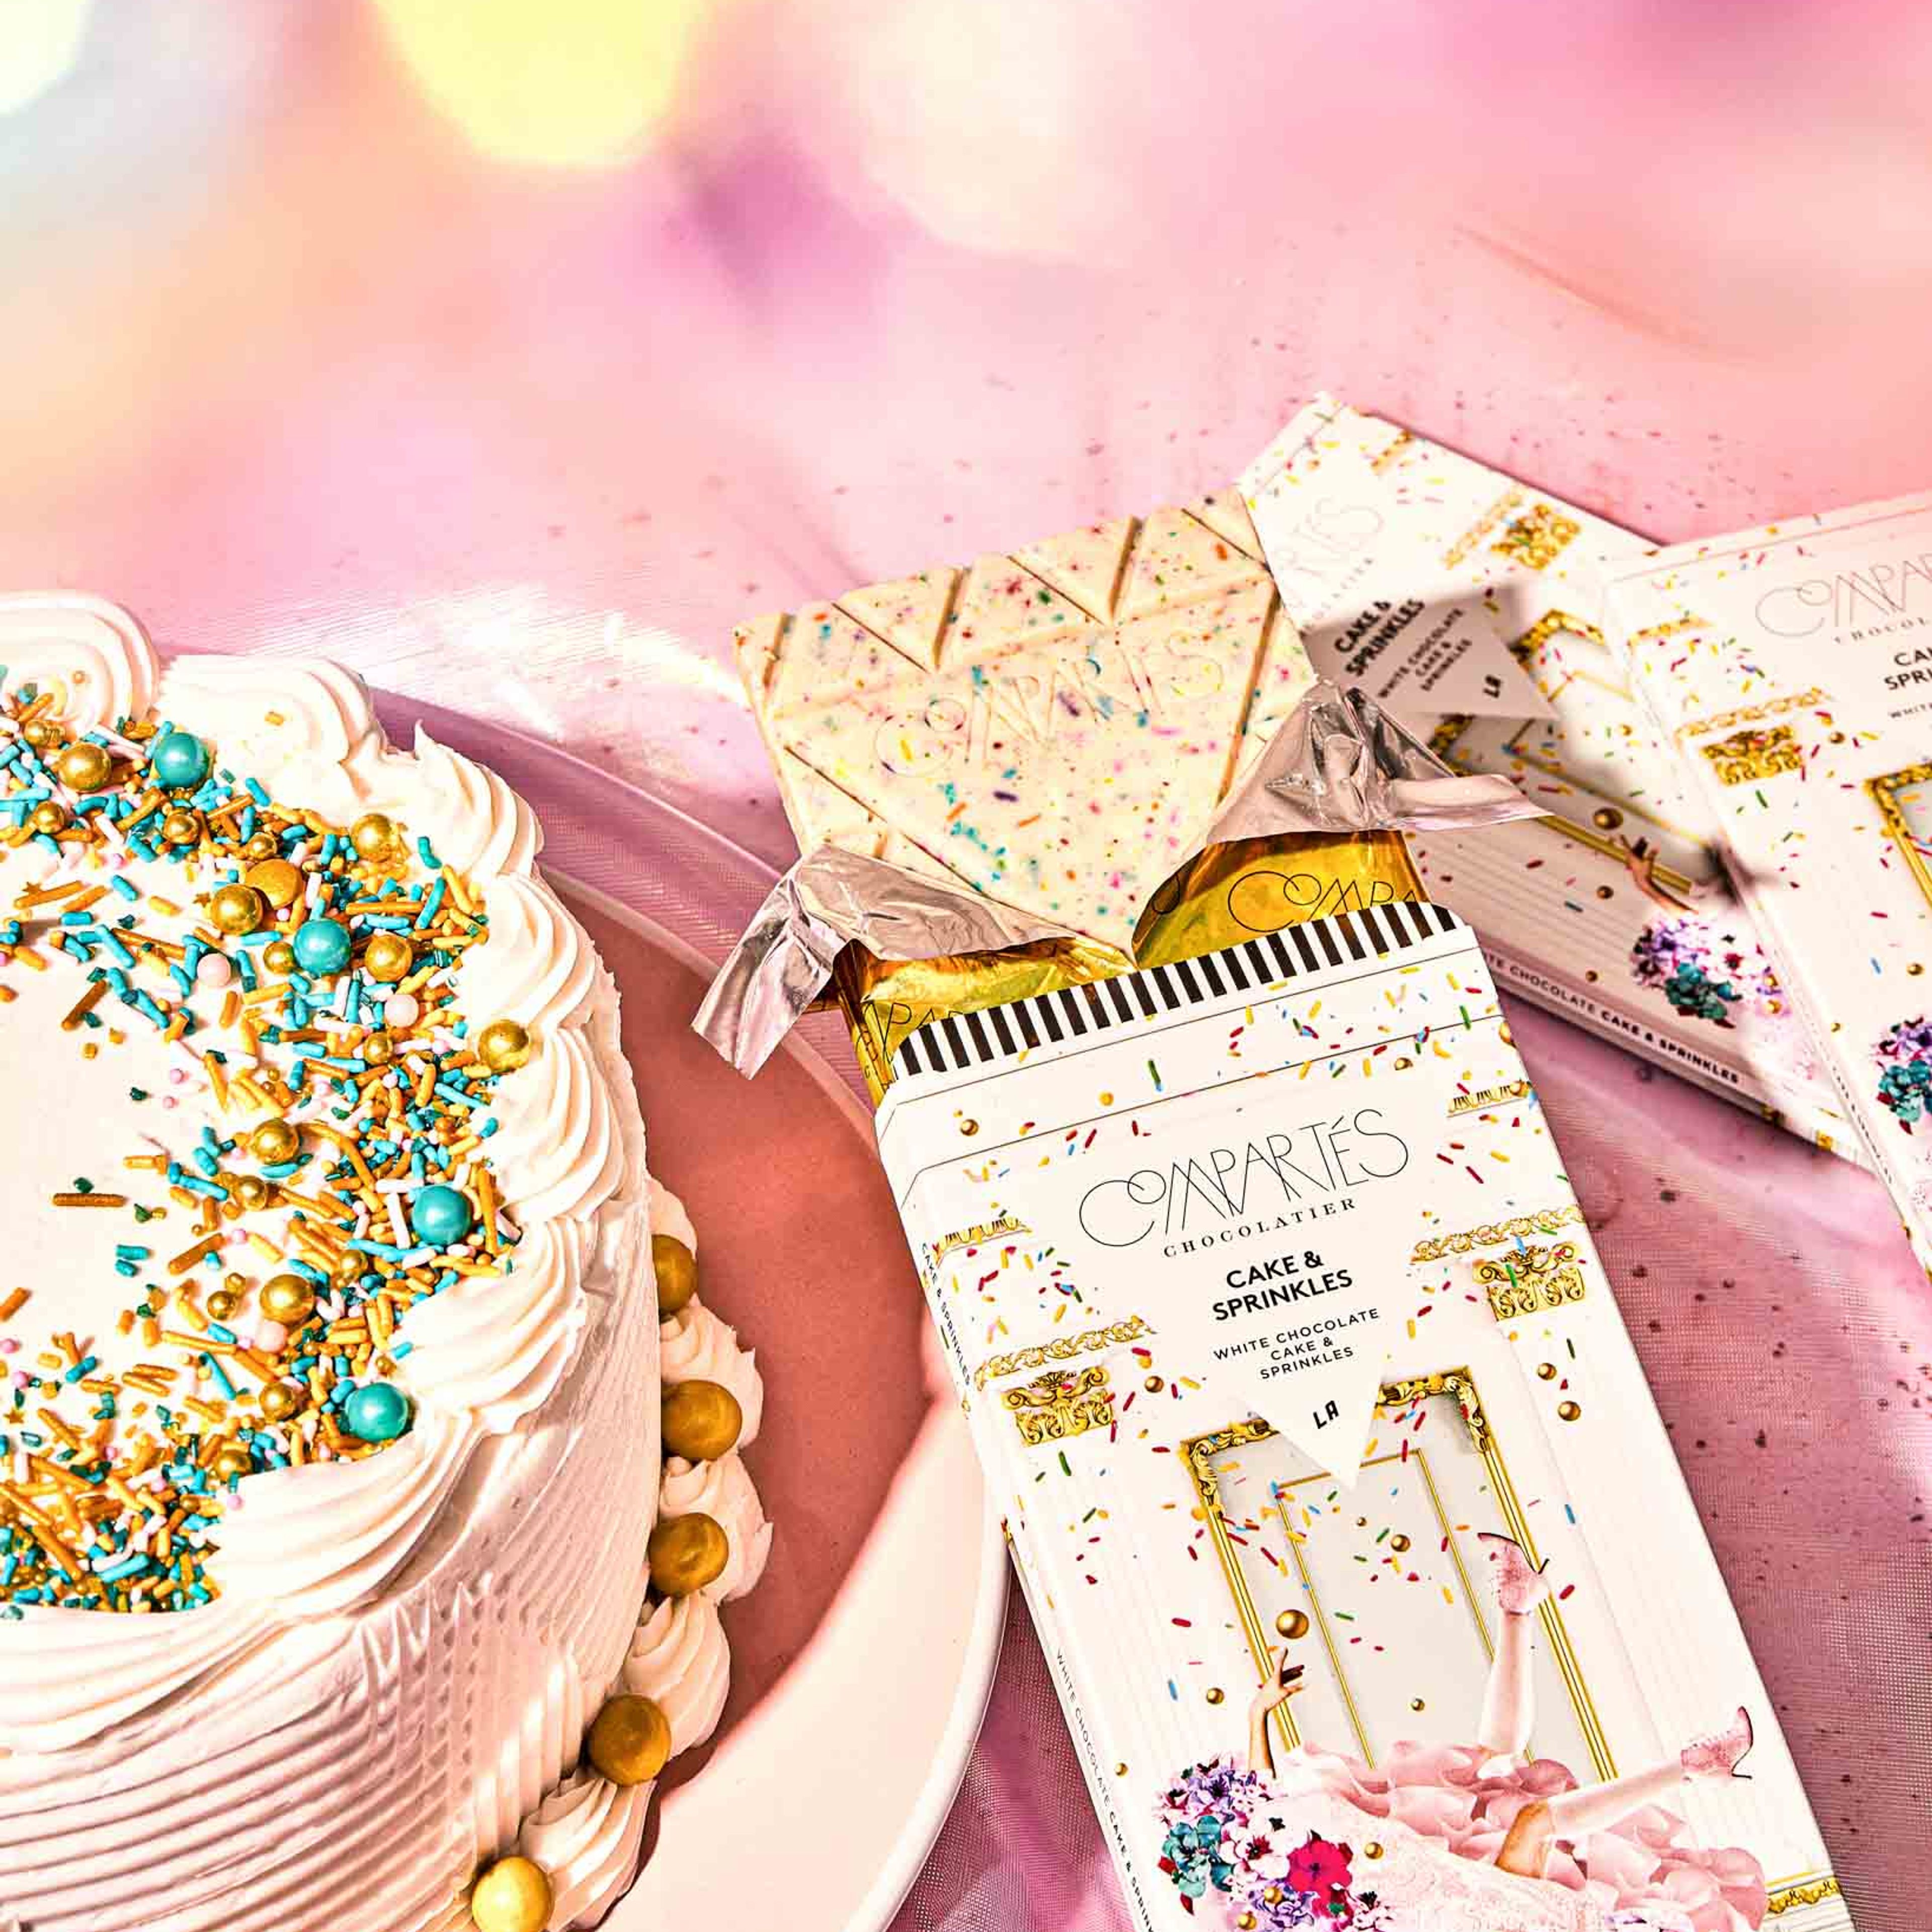 Cake and Sprinkles Luxury Chocolate Bar